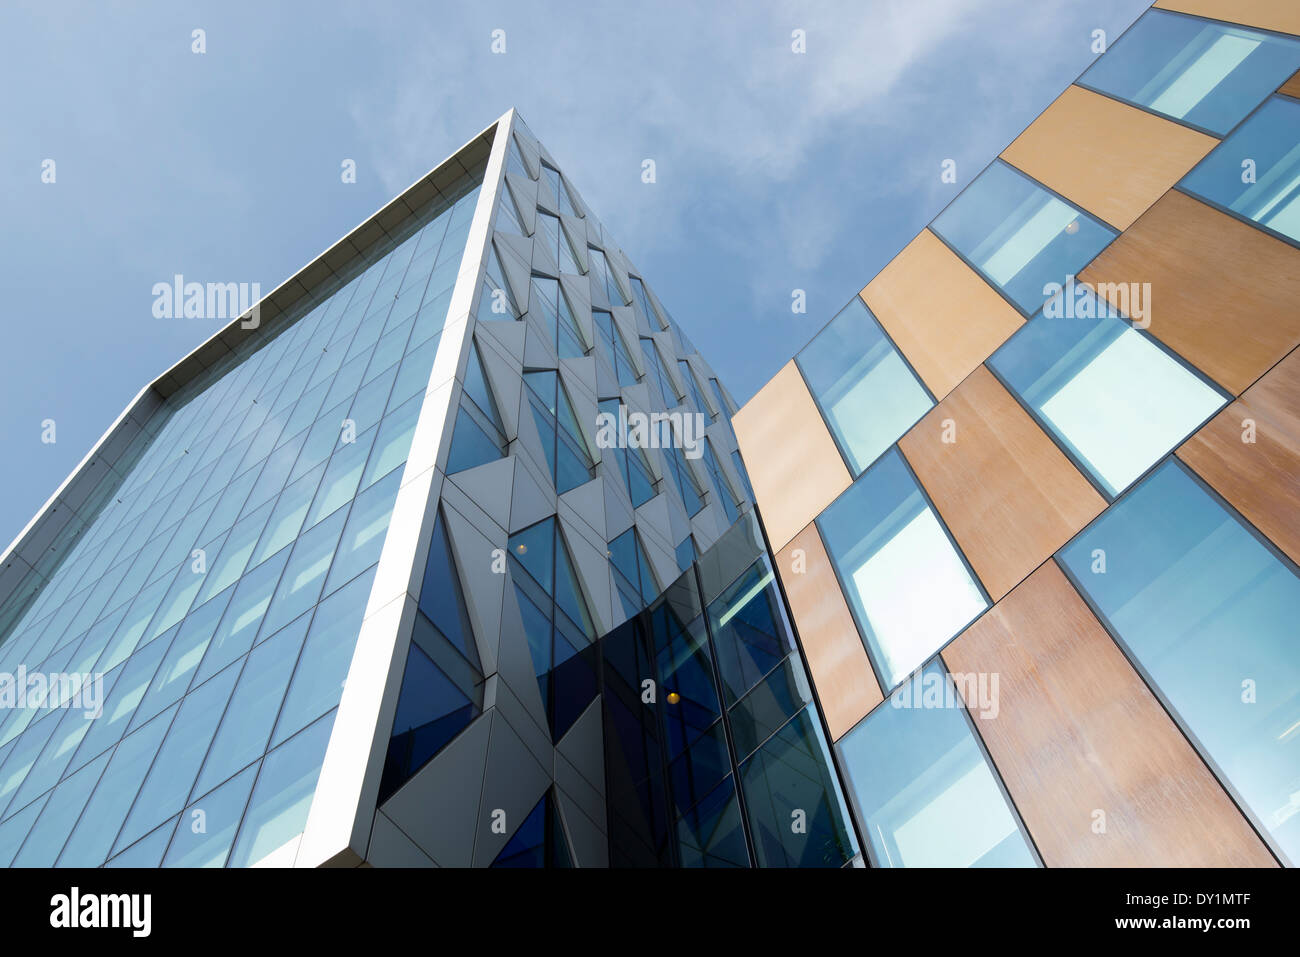 Les bâtiments en verre moderne Media City à Salford Quays, Manchester England UK Banque D'Images